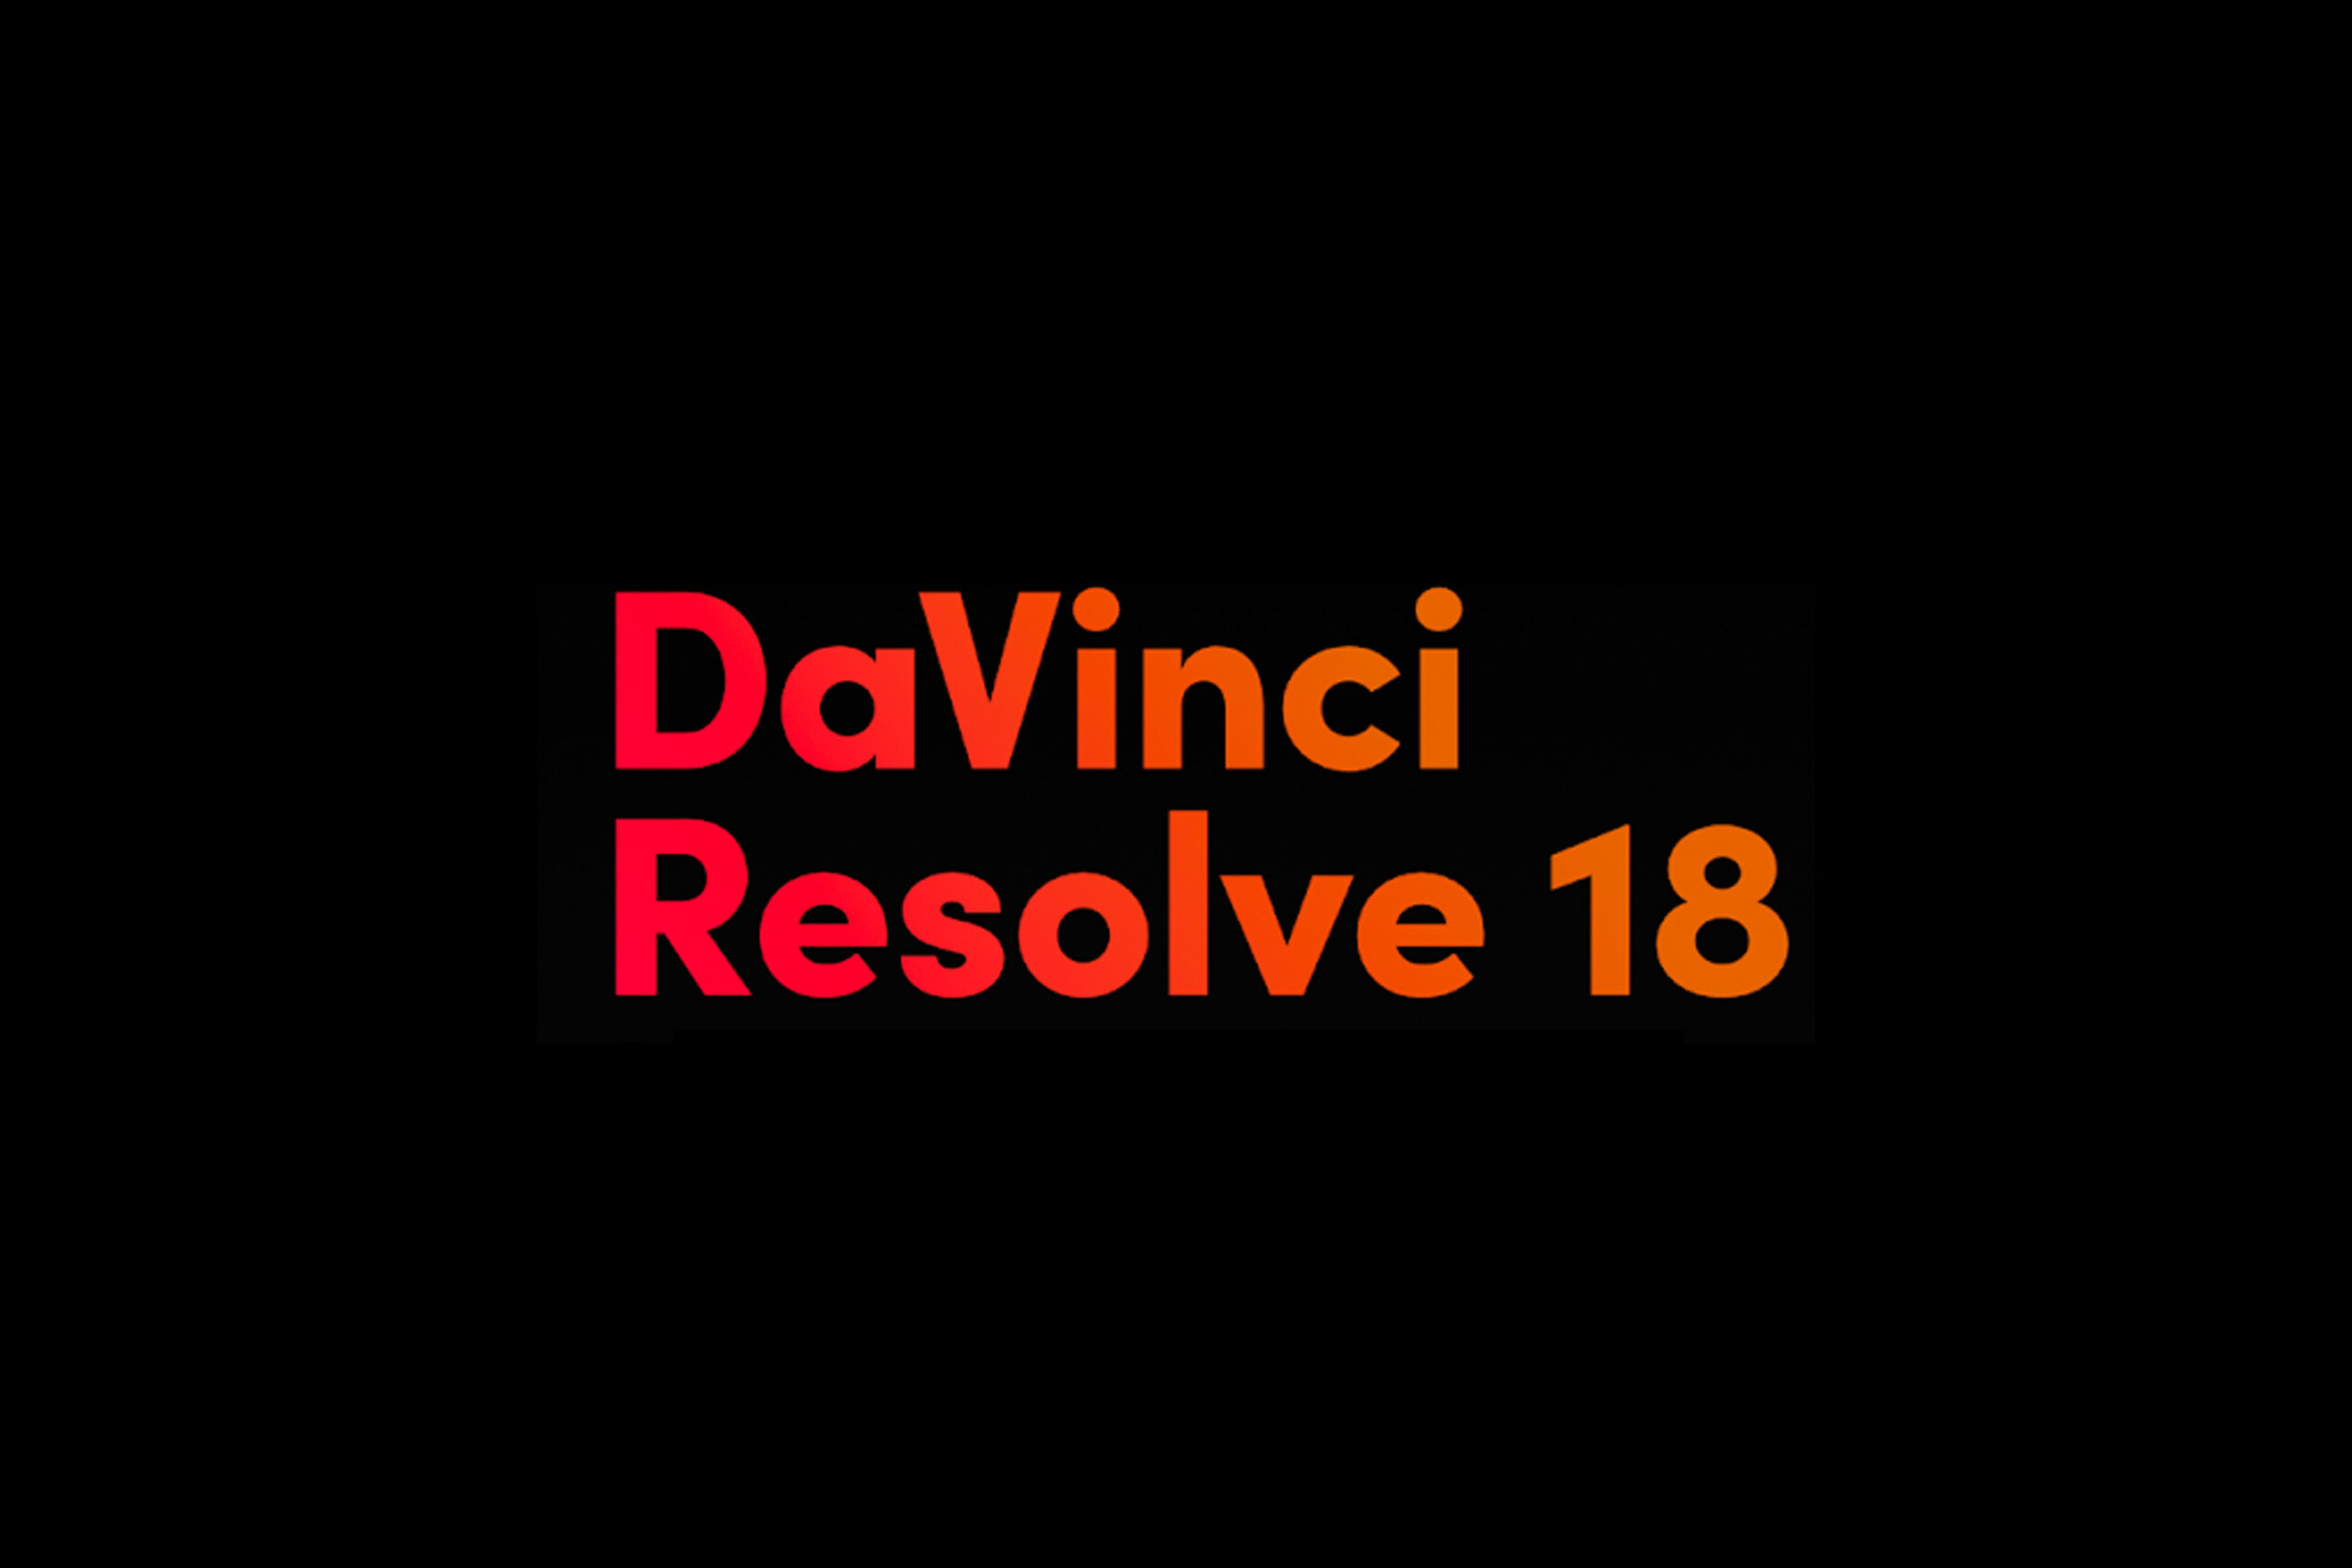 davinci resolve 18.0 download